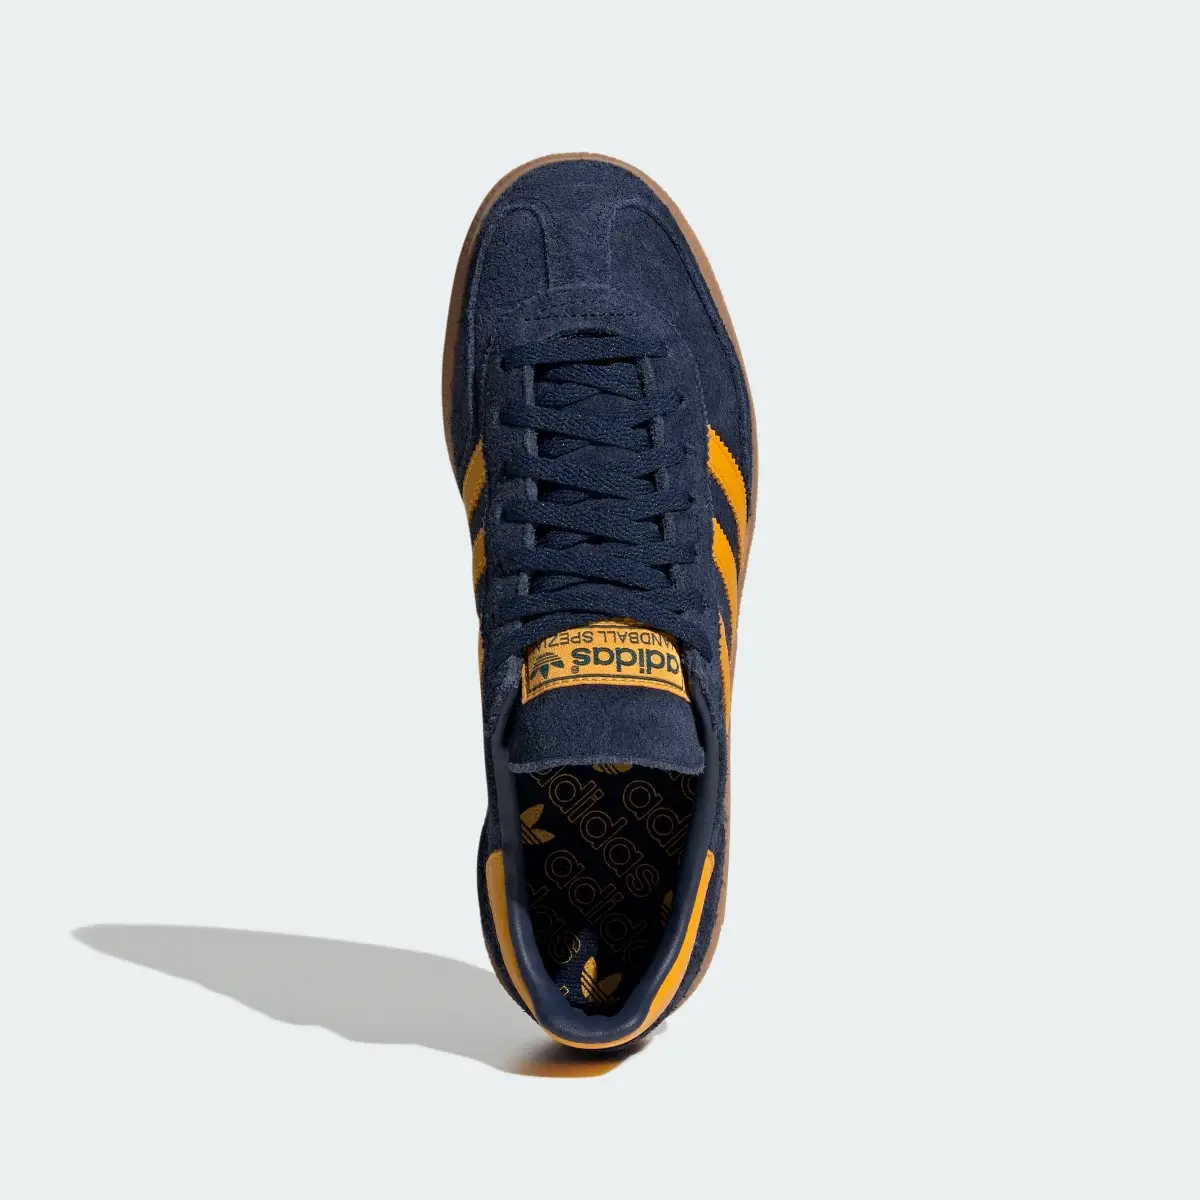 Adidas Handball Spezial Shoes. 3